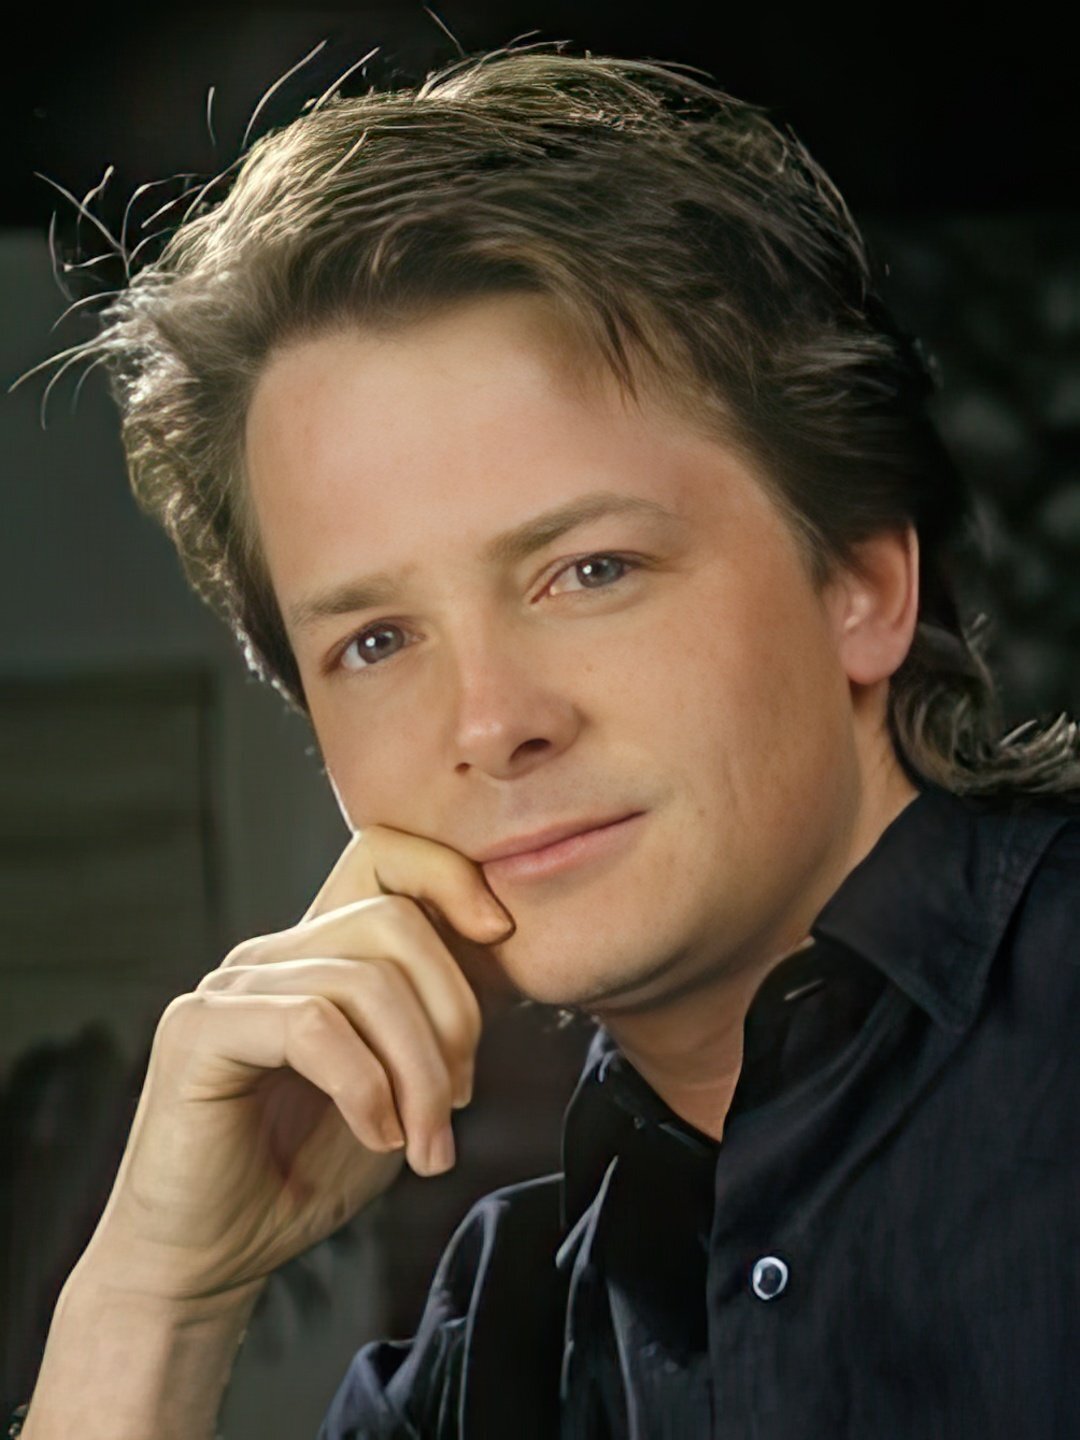 Michael J. Fox early life